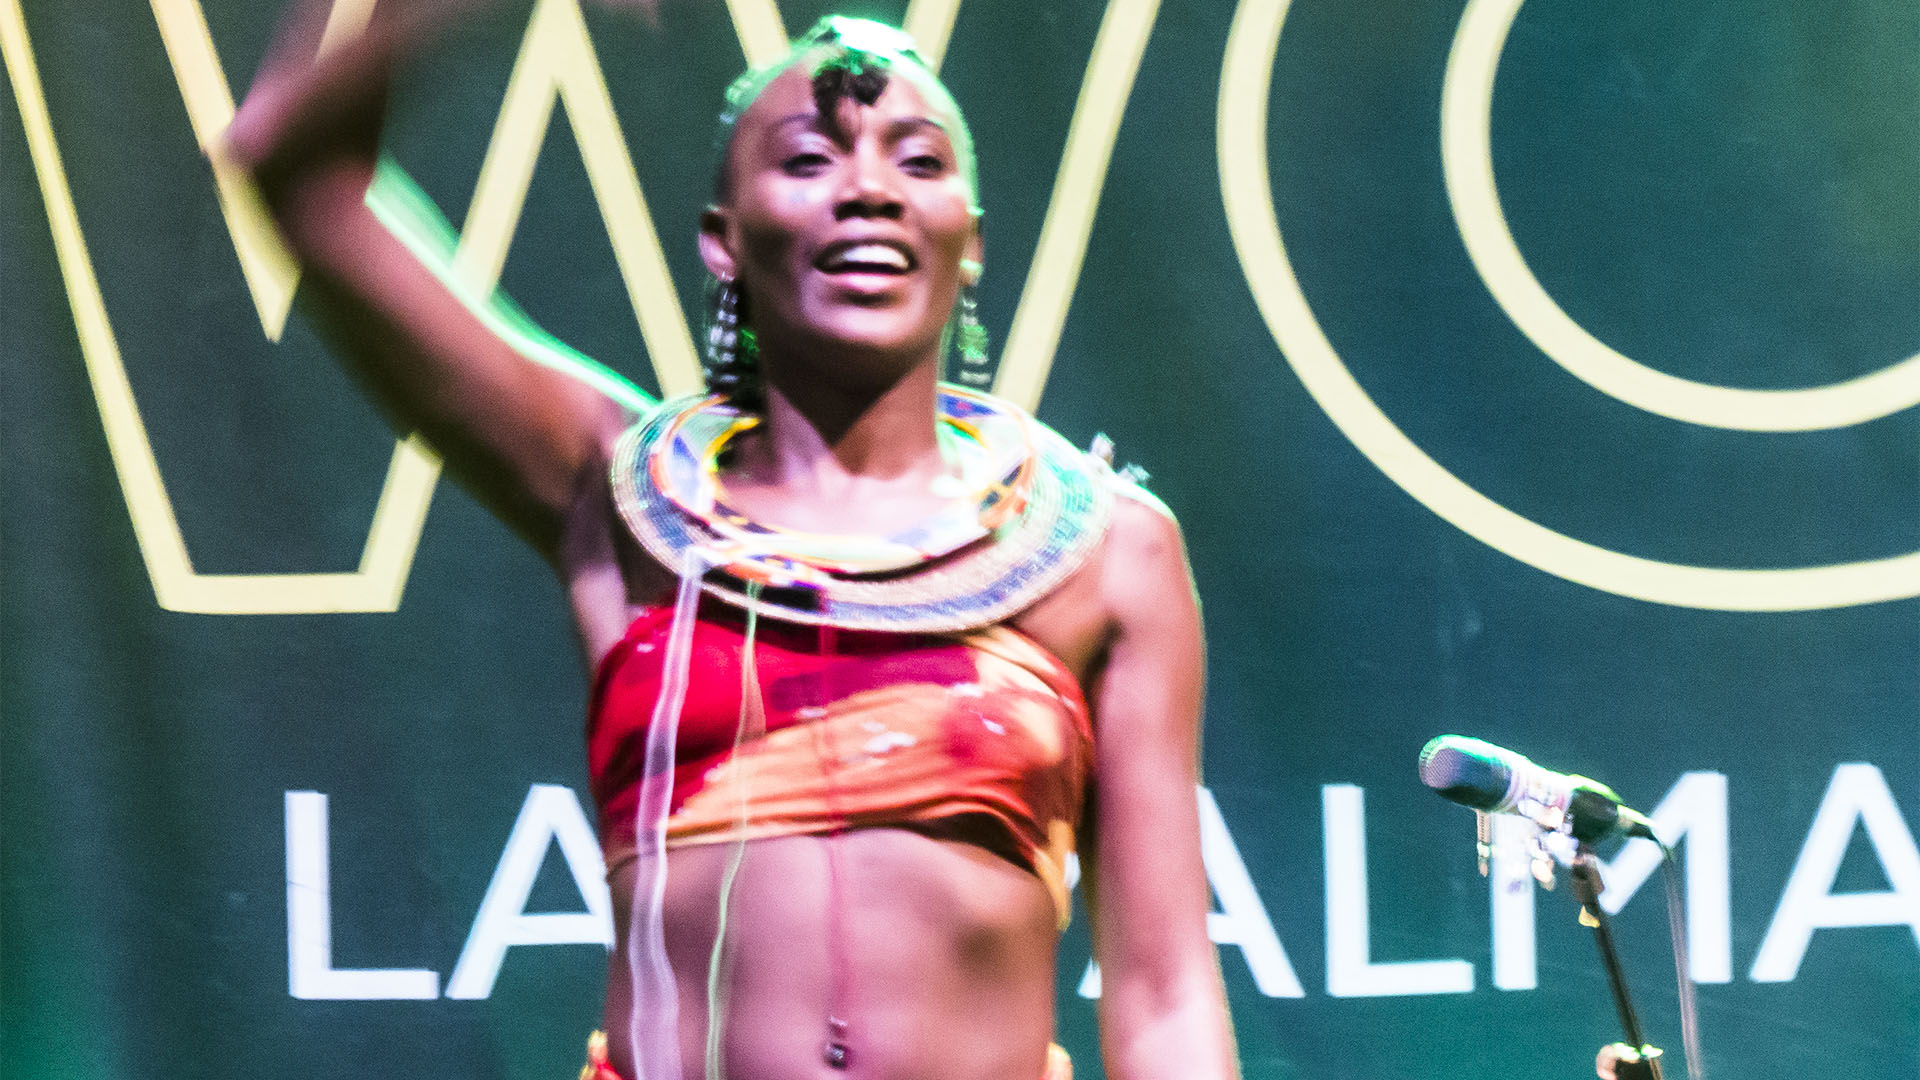 WOMAD Festival 2017 Las Palmas Gran Canaria. On stage: "Beating Heart Music" Electro Dance aus South Africa mit Performance von Lulu James Tansania / UK. Das Publikum bebt – zu recht.